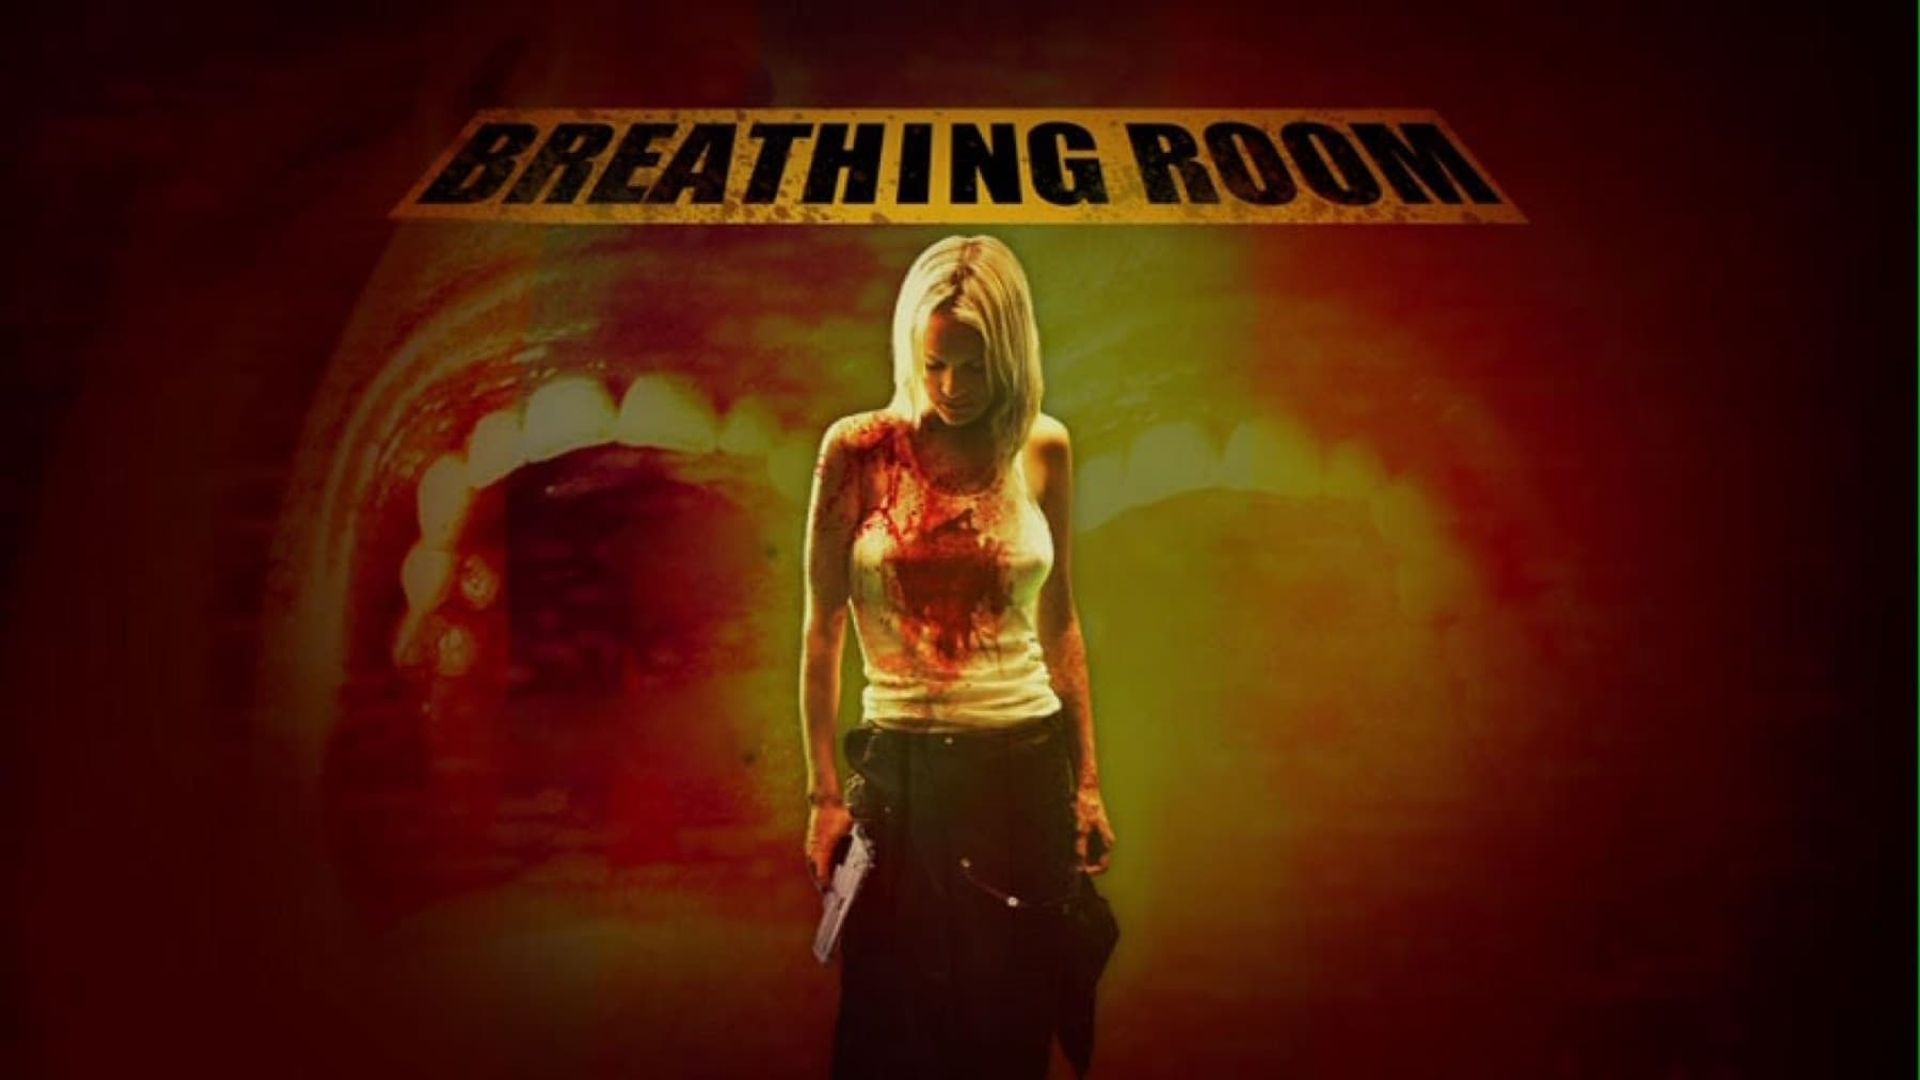 Breathing Room background